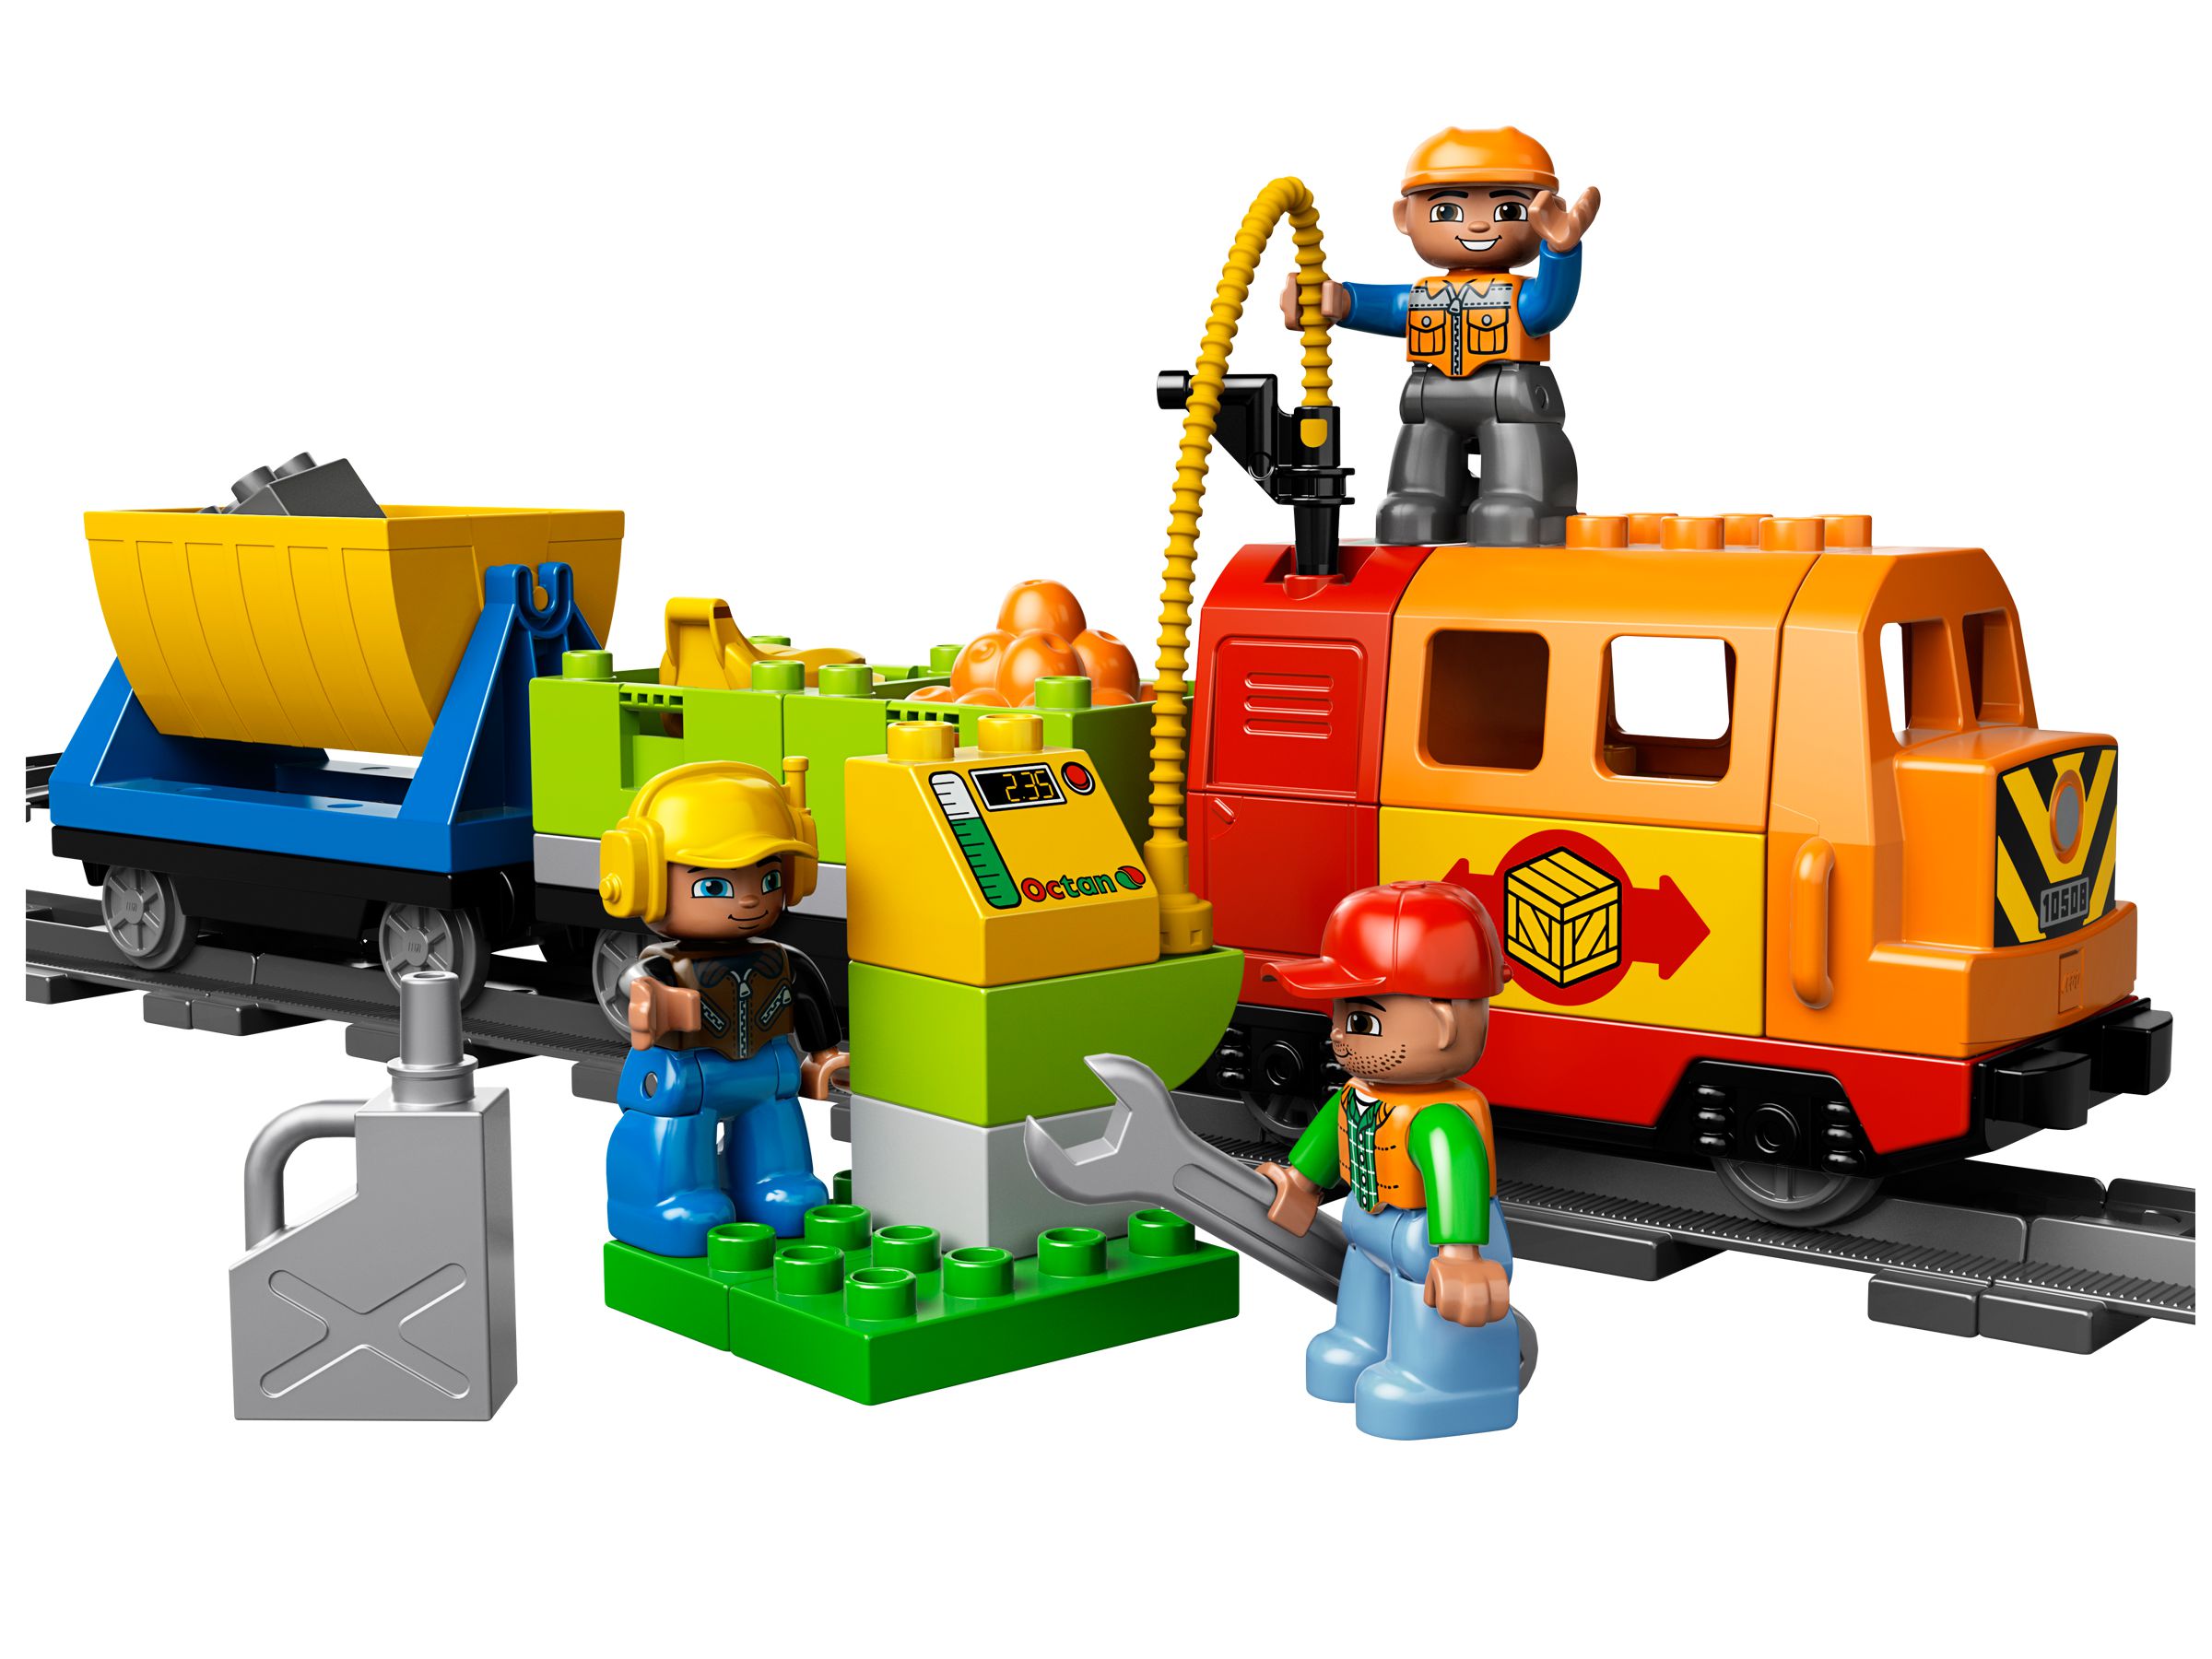 LEGO Duplo 10508 Eisenbahn Super Set LEGO_10508_alt3.jpg